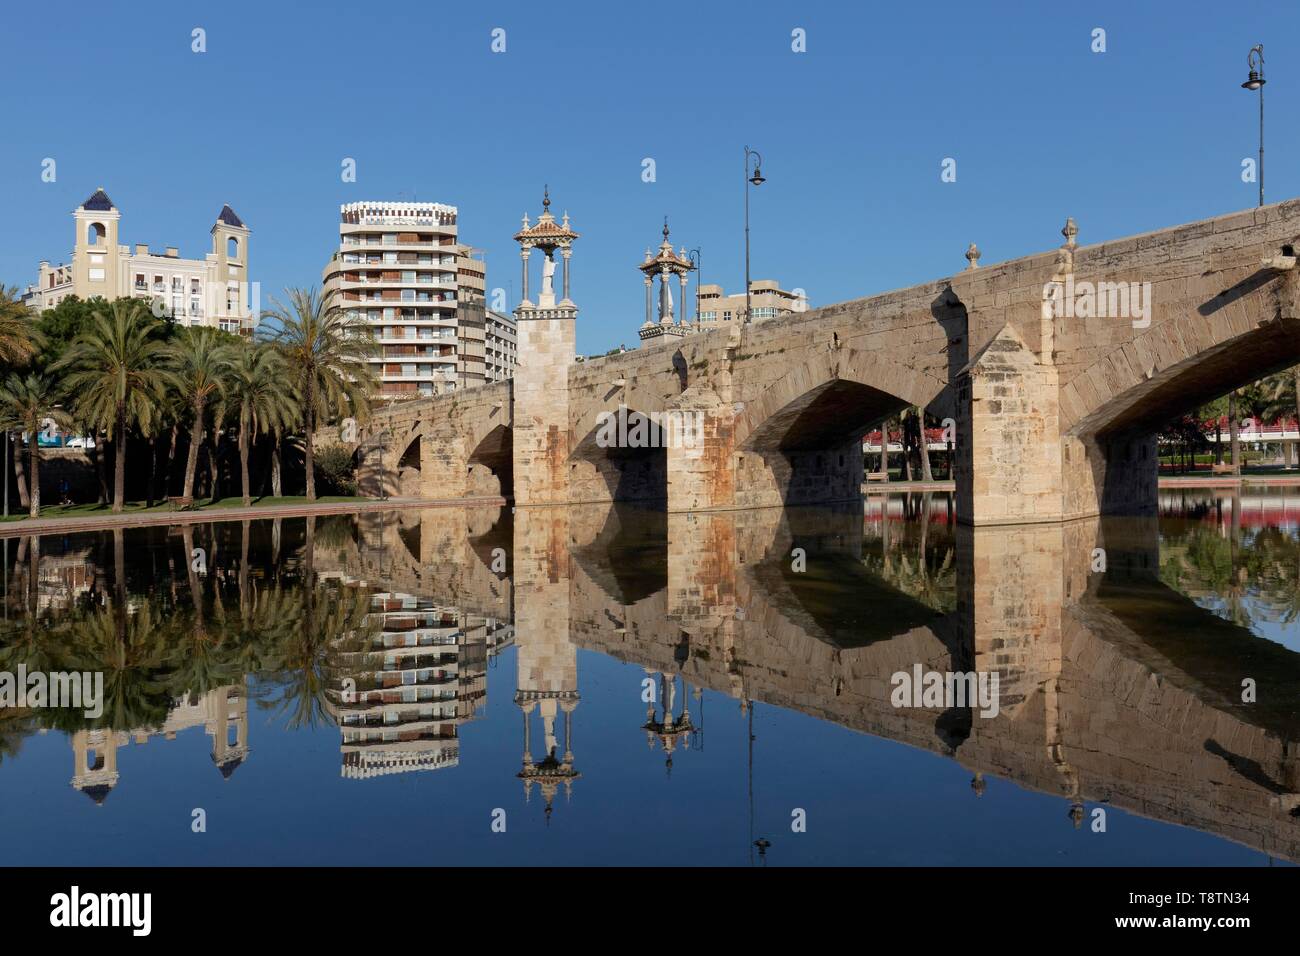 Historical bridge with statues of saints, Puente del Mar, Turia Park, Jardi del Turia, Valencia, Spain Stock Photo